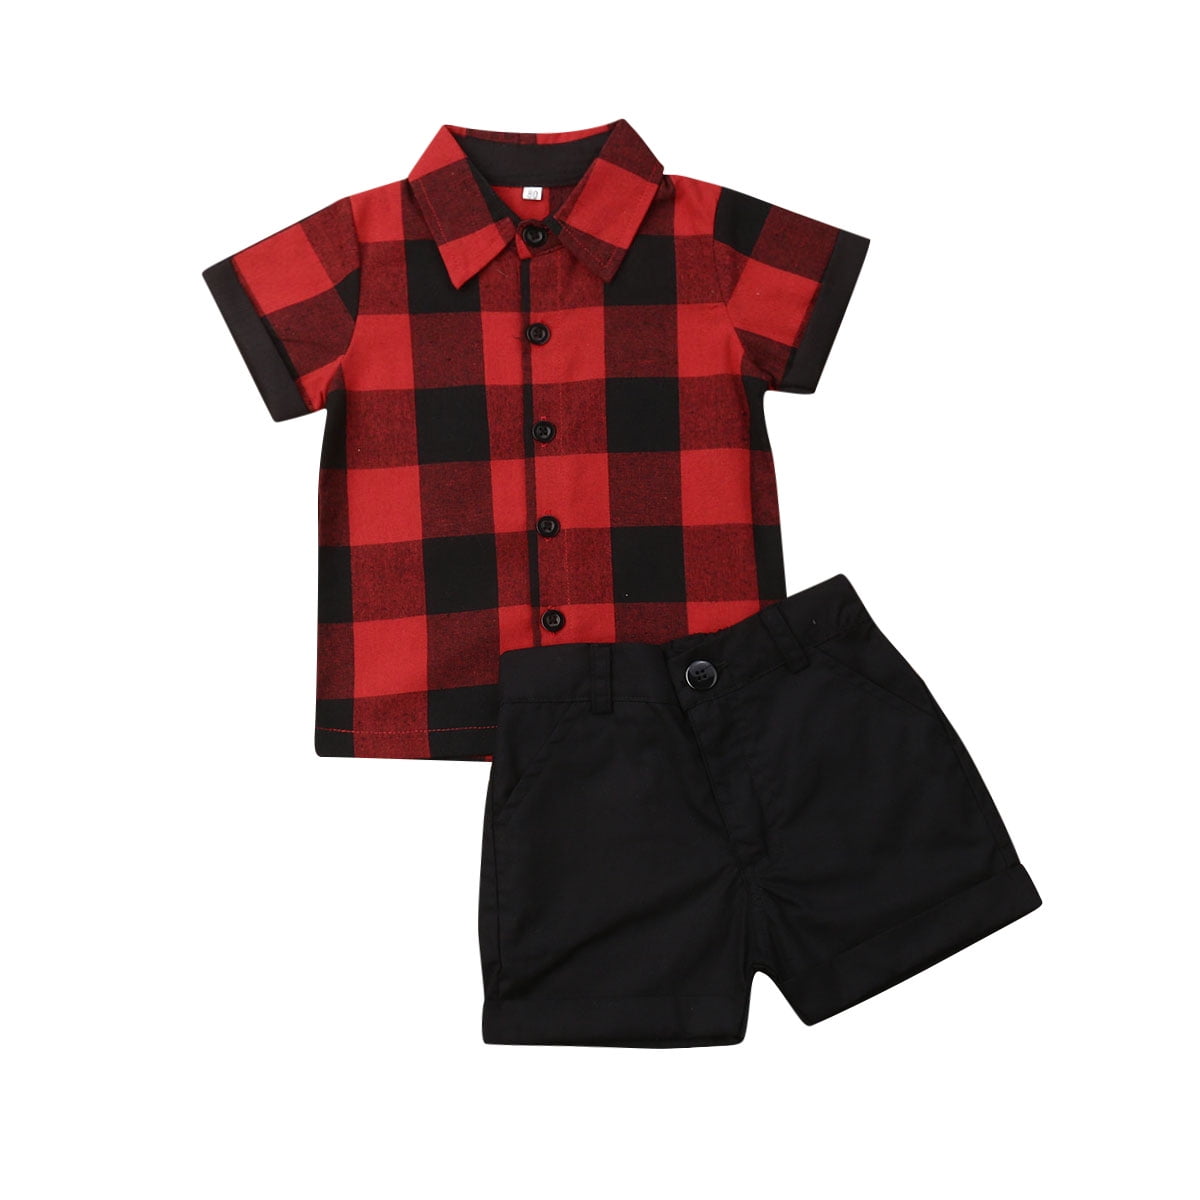 Boy's Christmas Boutique Striped RV Top Christmas Camping Tartan Plaid & Stripe RV T-Shirt Toddler Sizes 12 18 Months 2T 3T 4T 5 6 7 8